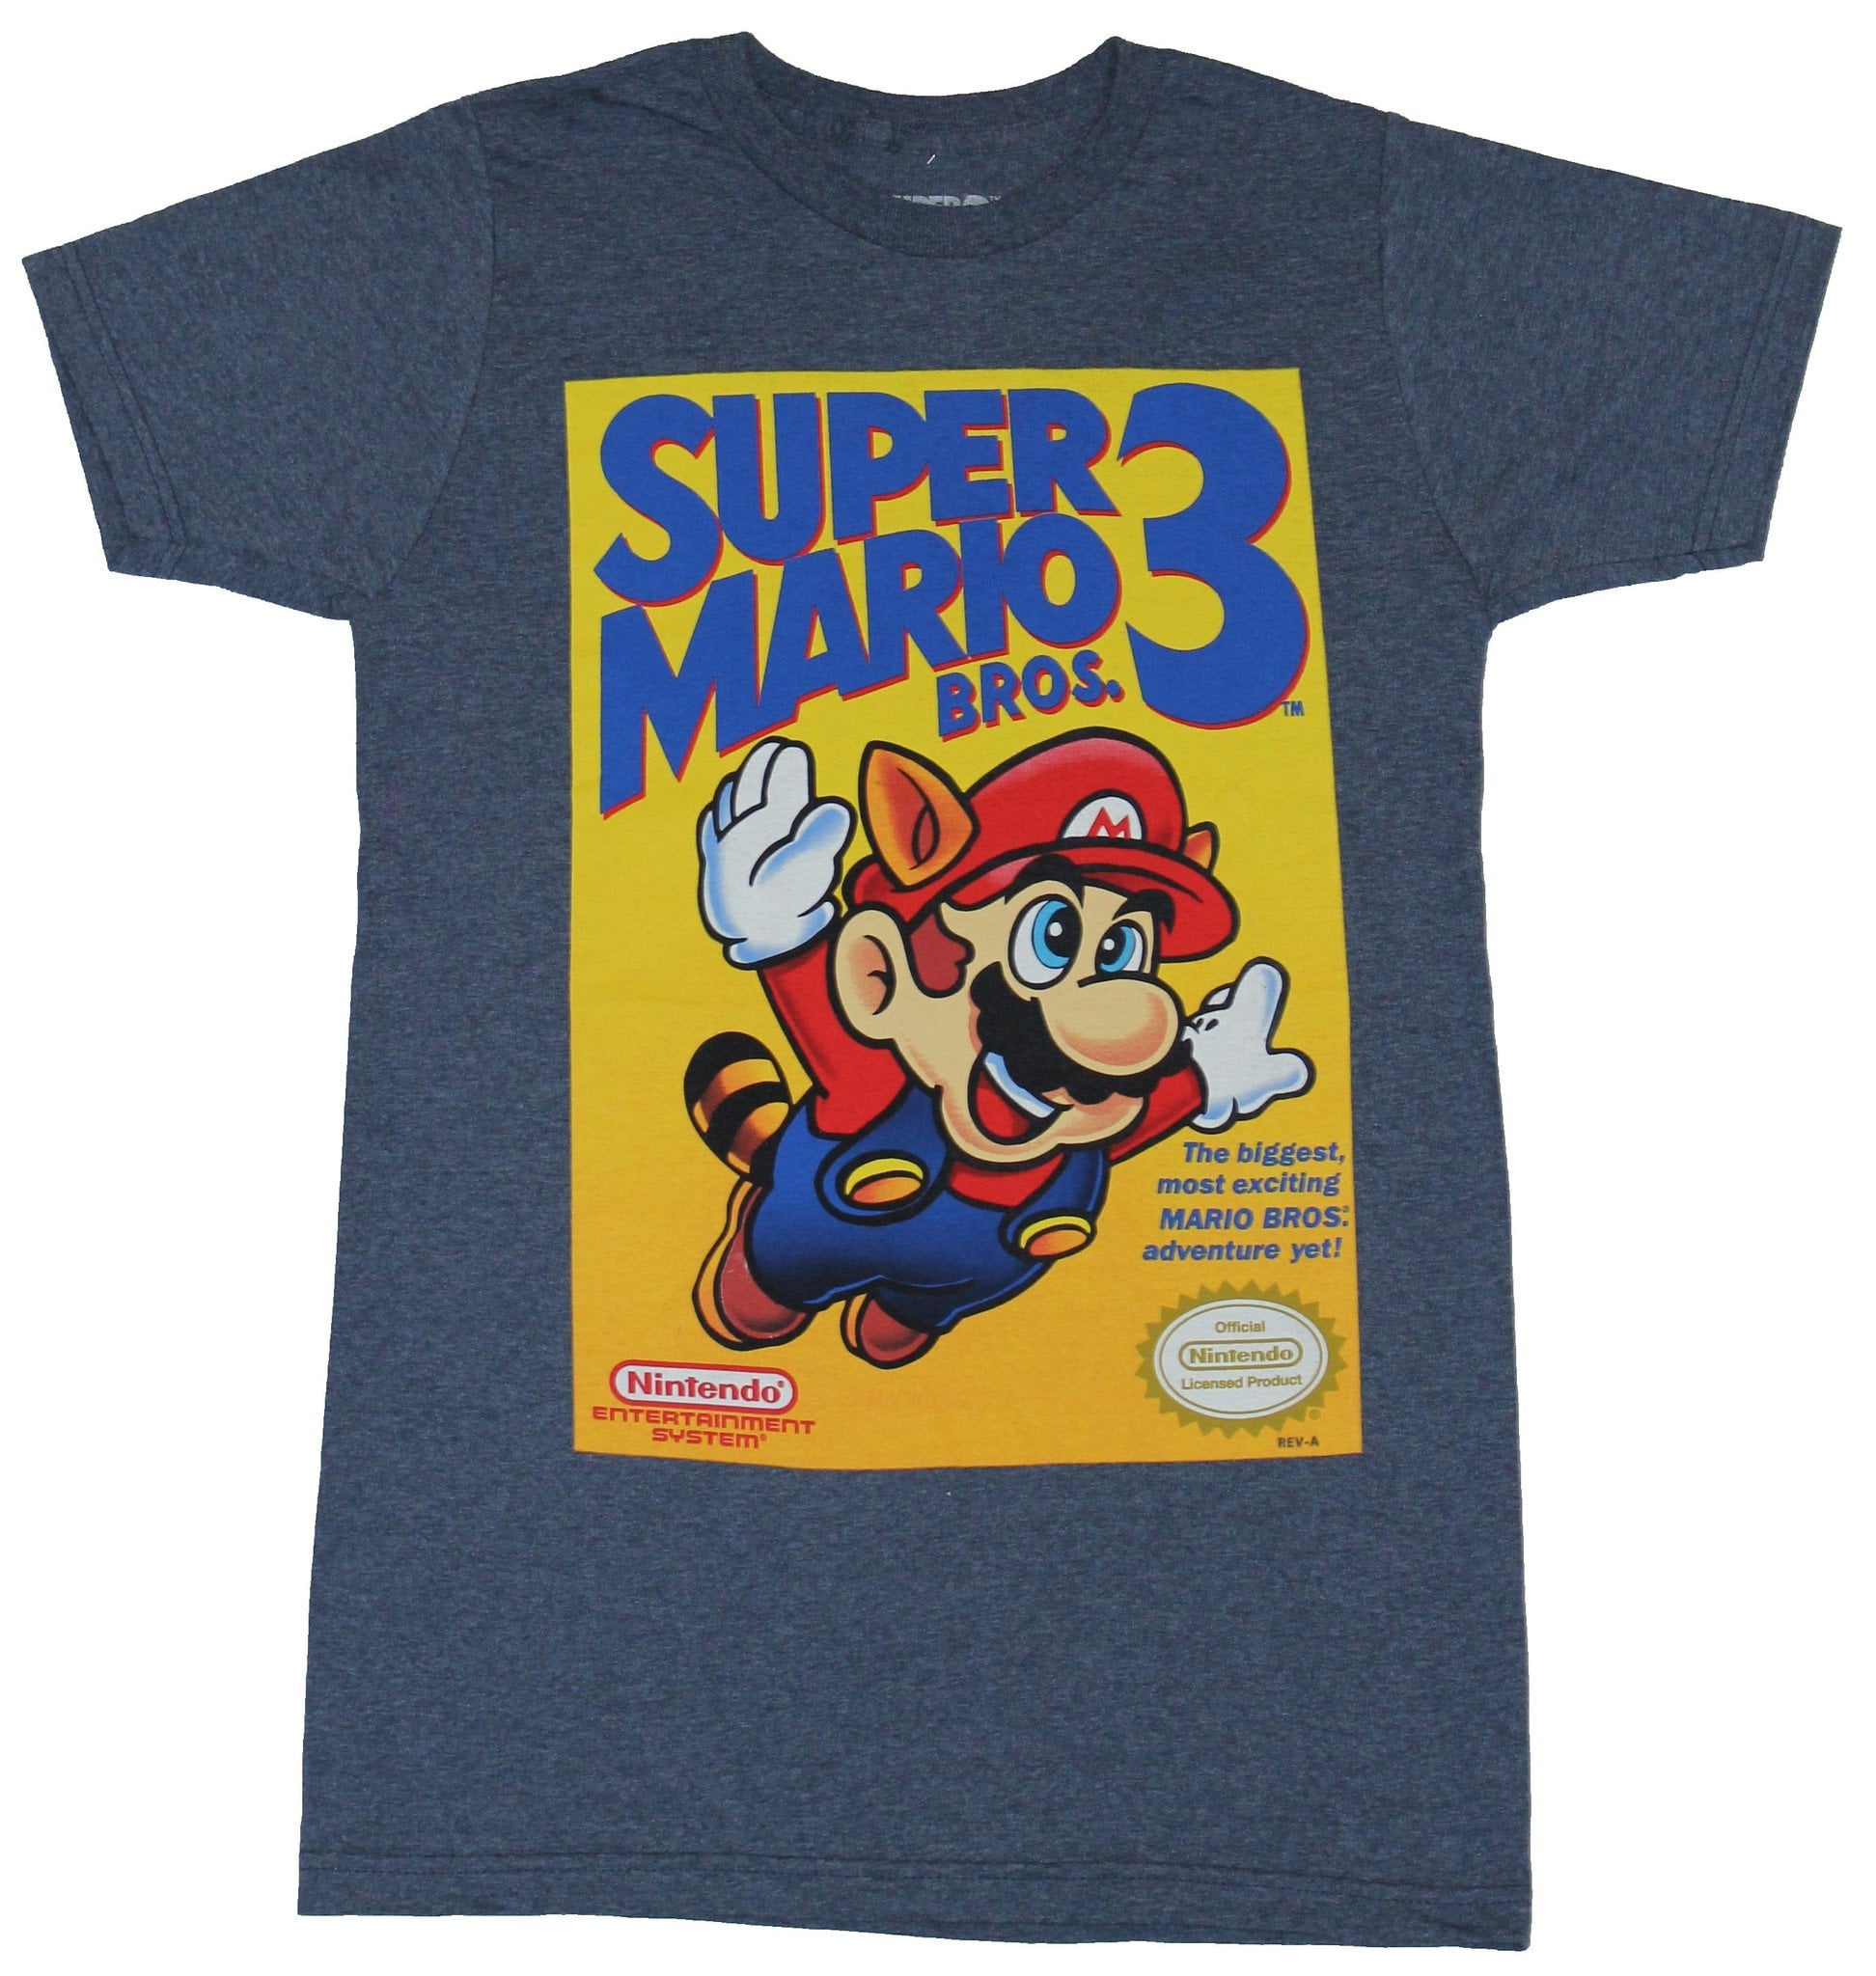 Super Mario Brothers 3 Mens T-Shirt - Classic Yellow Box 3 Image